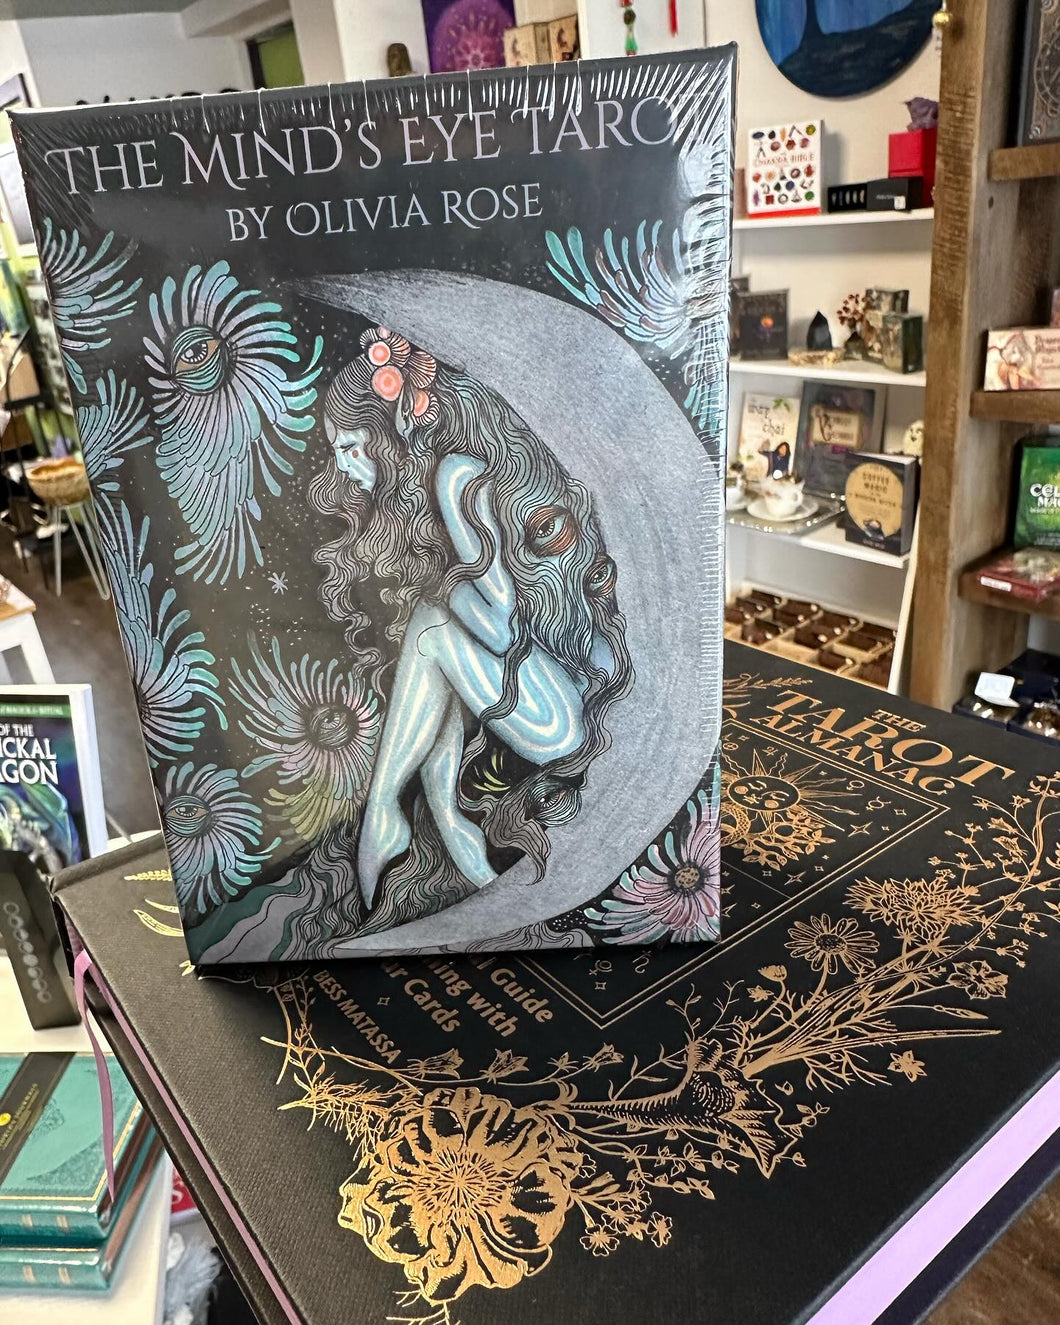 The Mind's Eye Tarot by Olivia Rose (Illustrator)